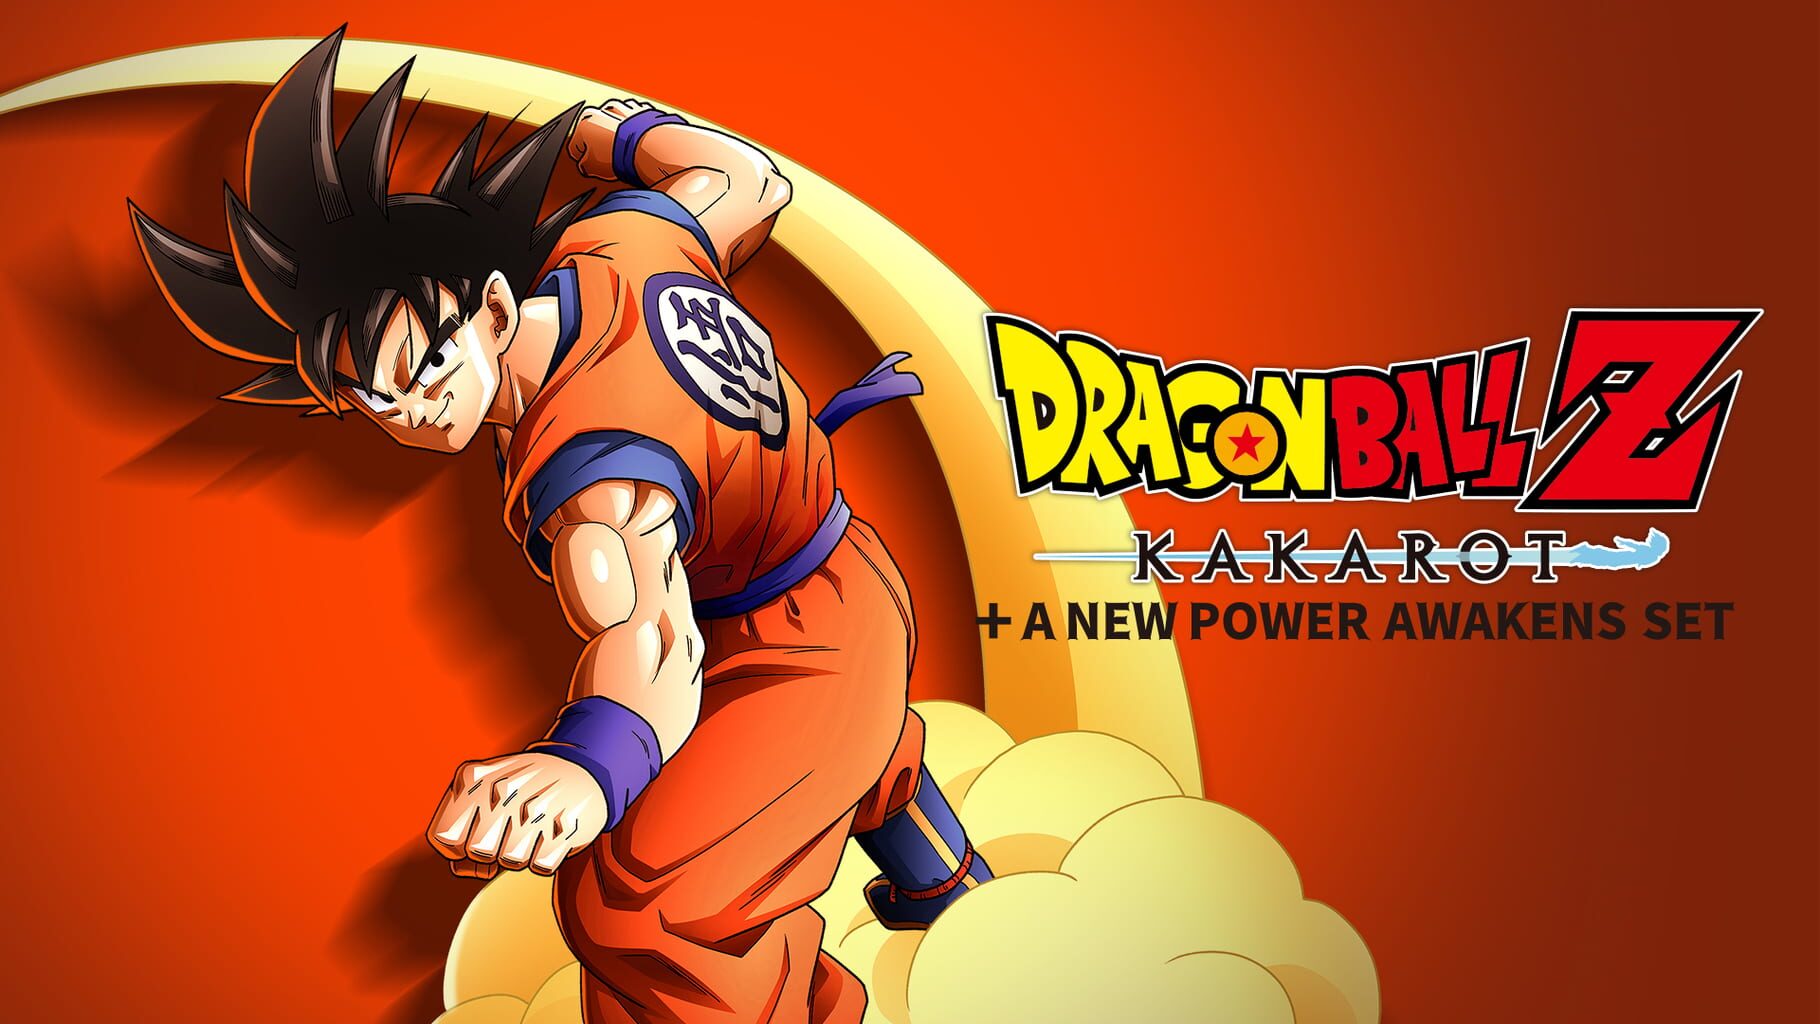 Arte - Dragon Ball Z: Kakarot + A New Power Awakens Set